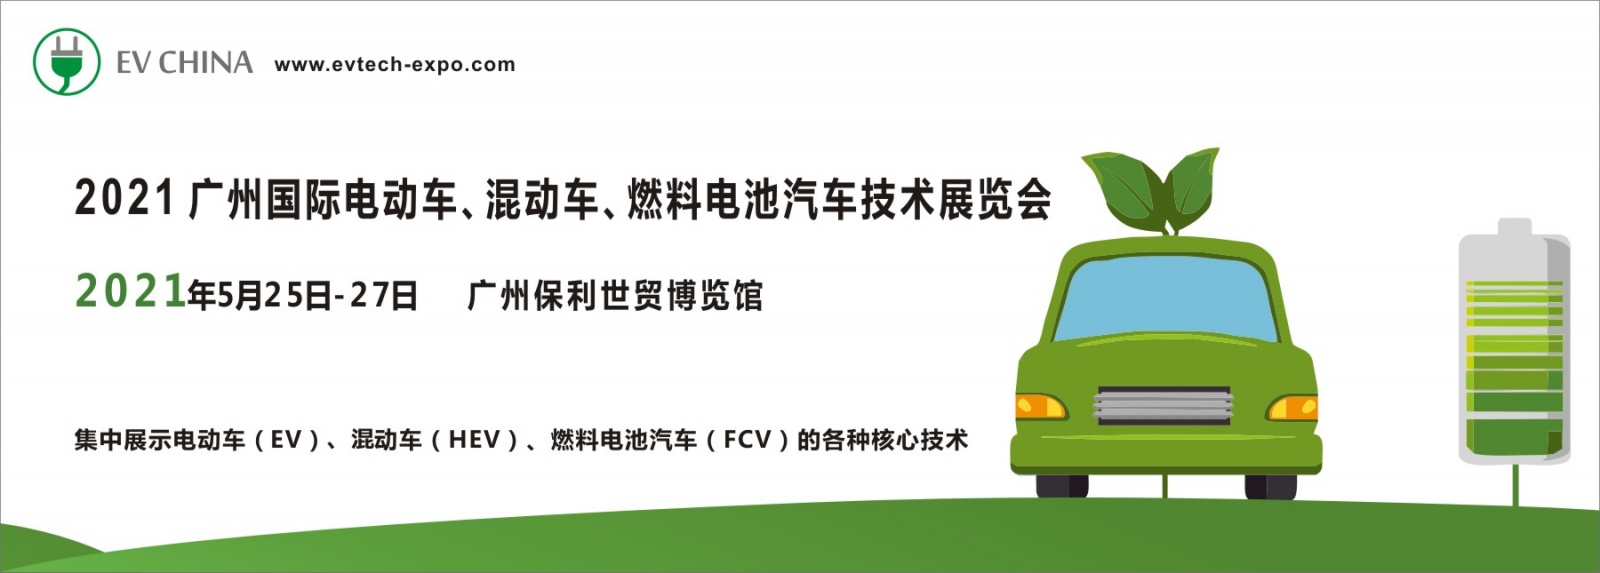 EV China 2021 广州国际电动车、混动车、燃料电池汽车技术展览会